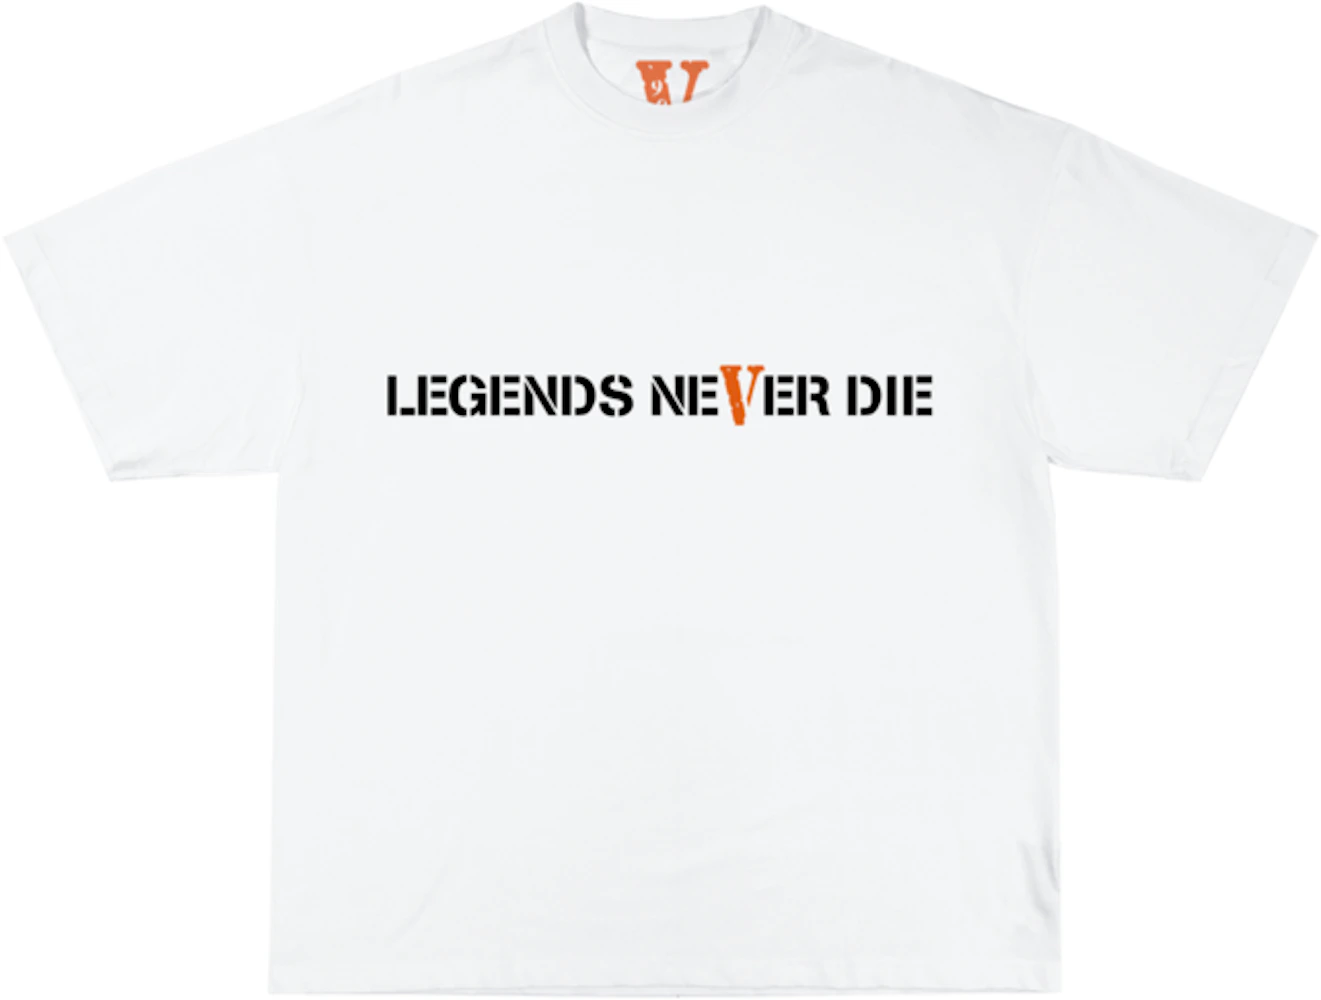 Juice Wrld x Vlone Legends Never Die Tee